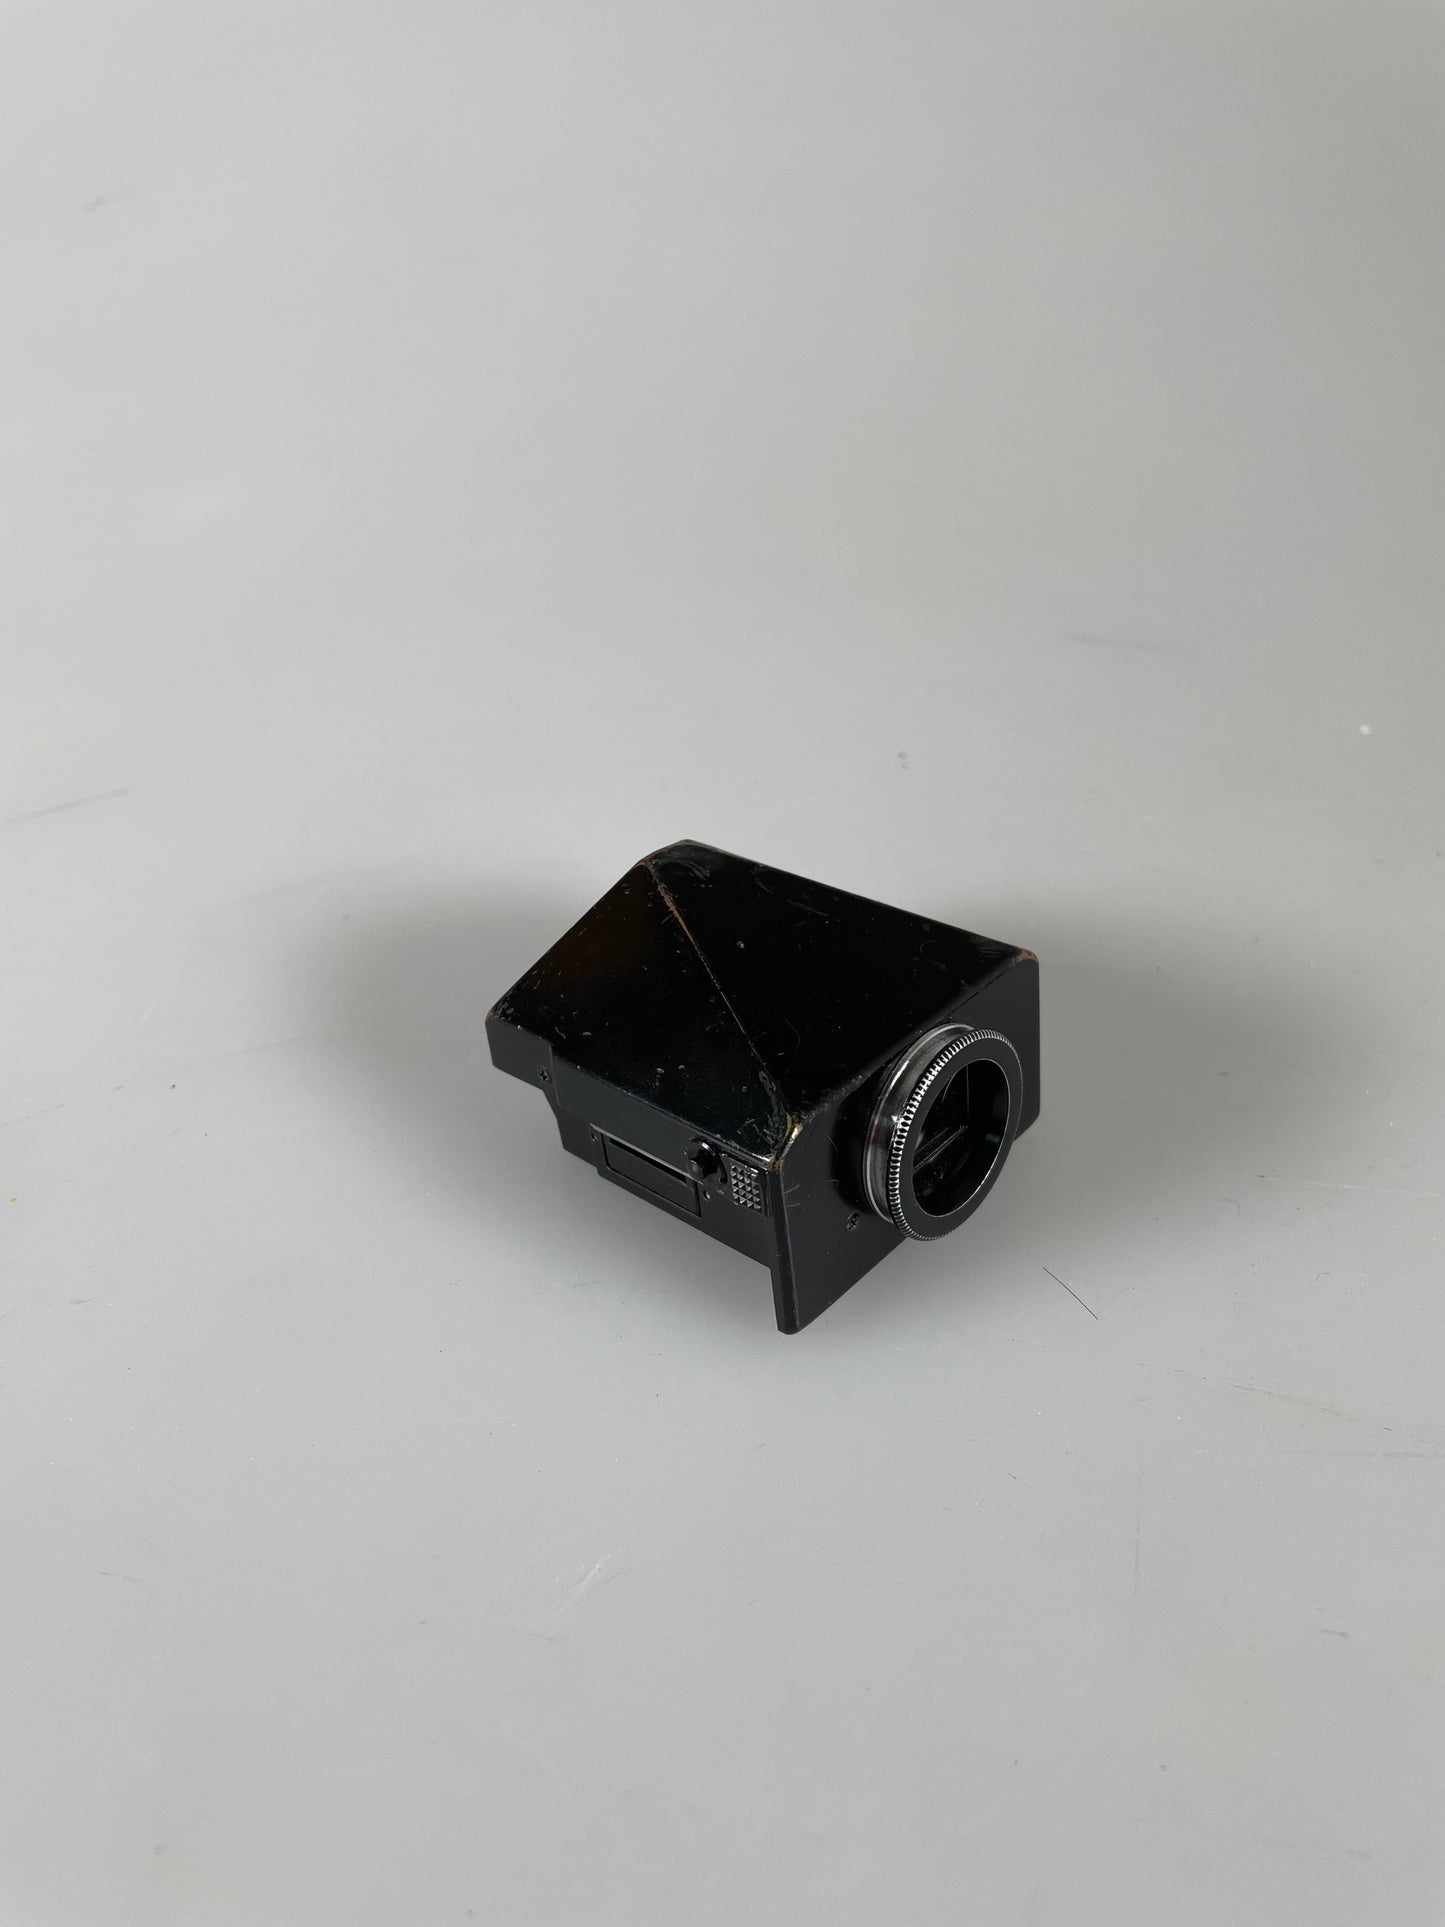 Canon Prism Finder for F-1 F1 Cameras